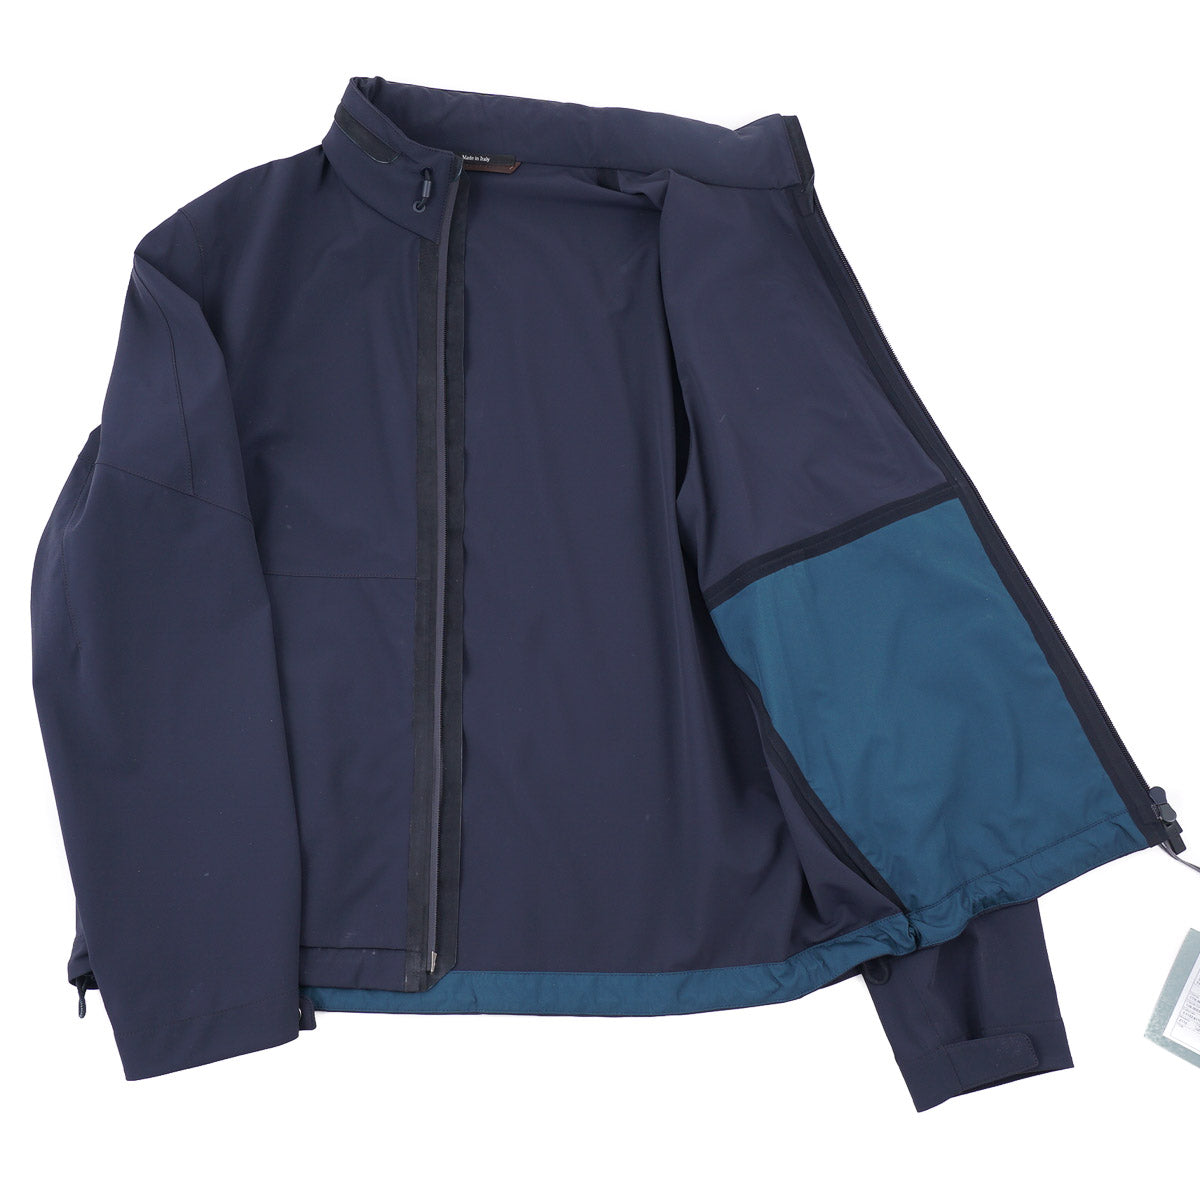 Ermenegildo Zegna Weather-Repellent Jacket - Top Shelf Apparel